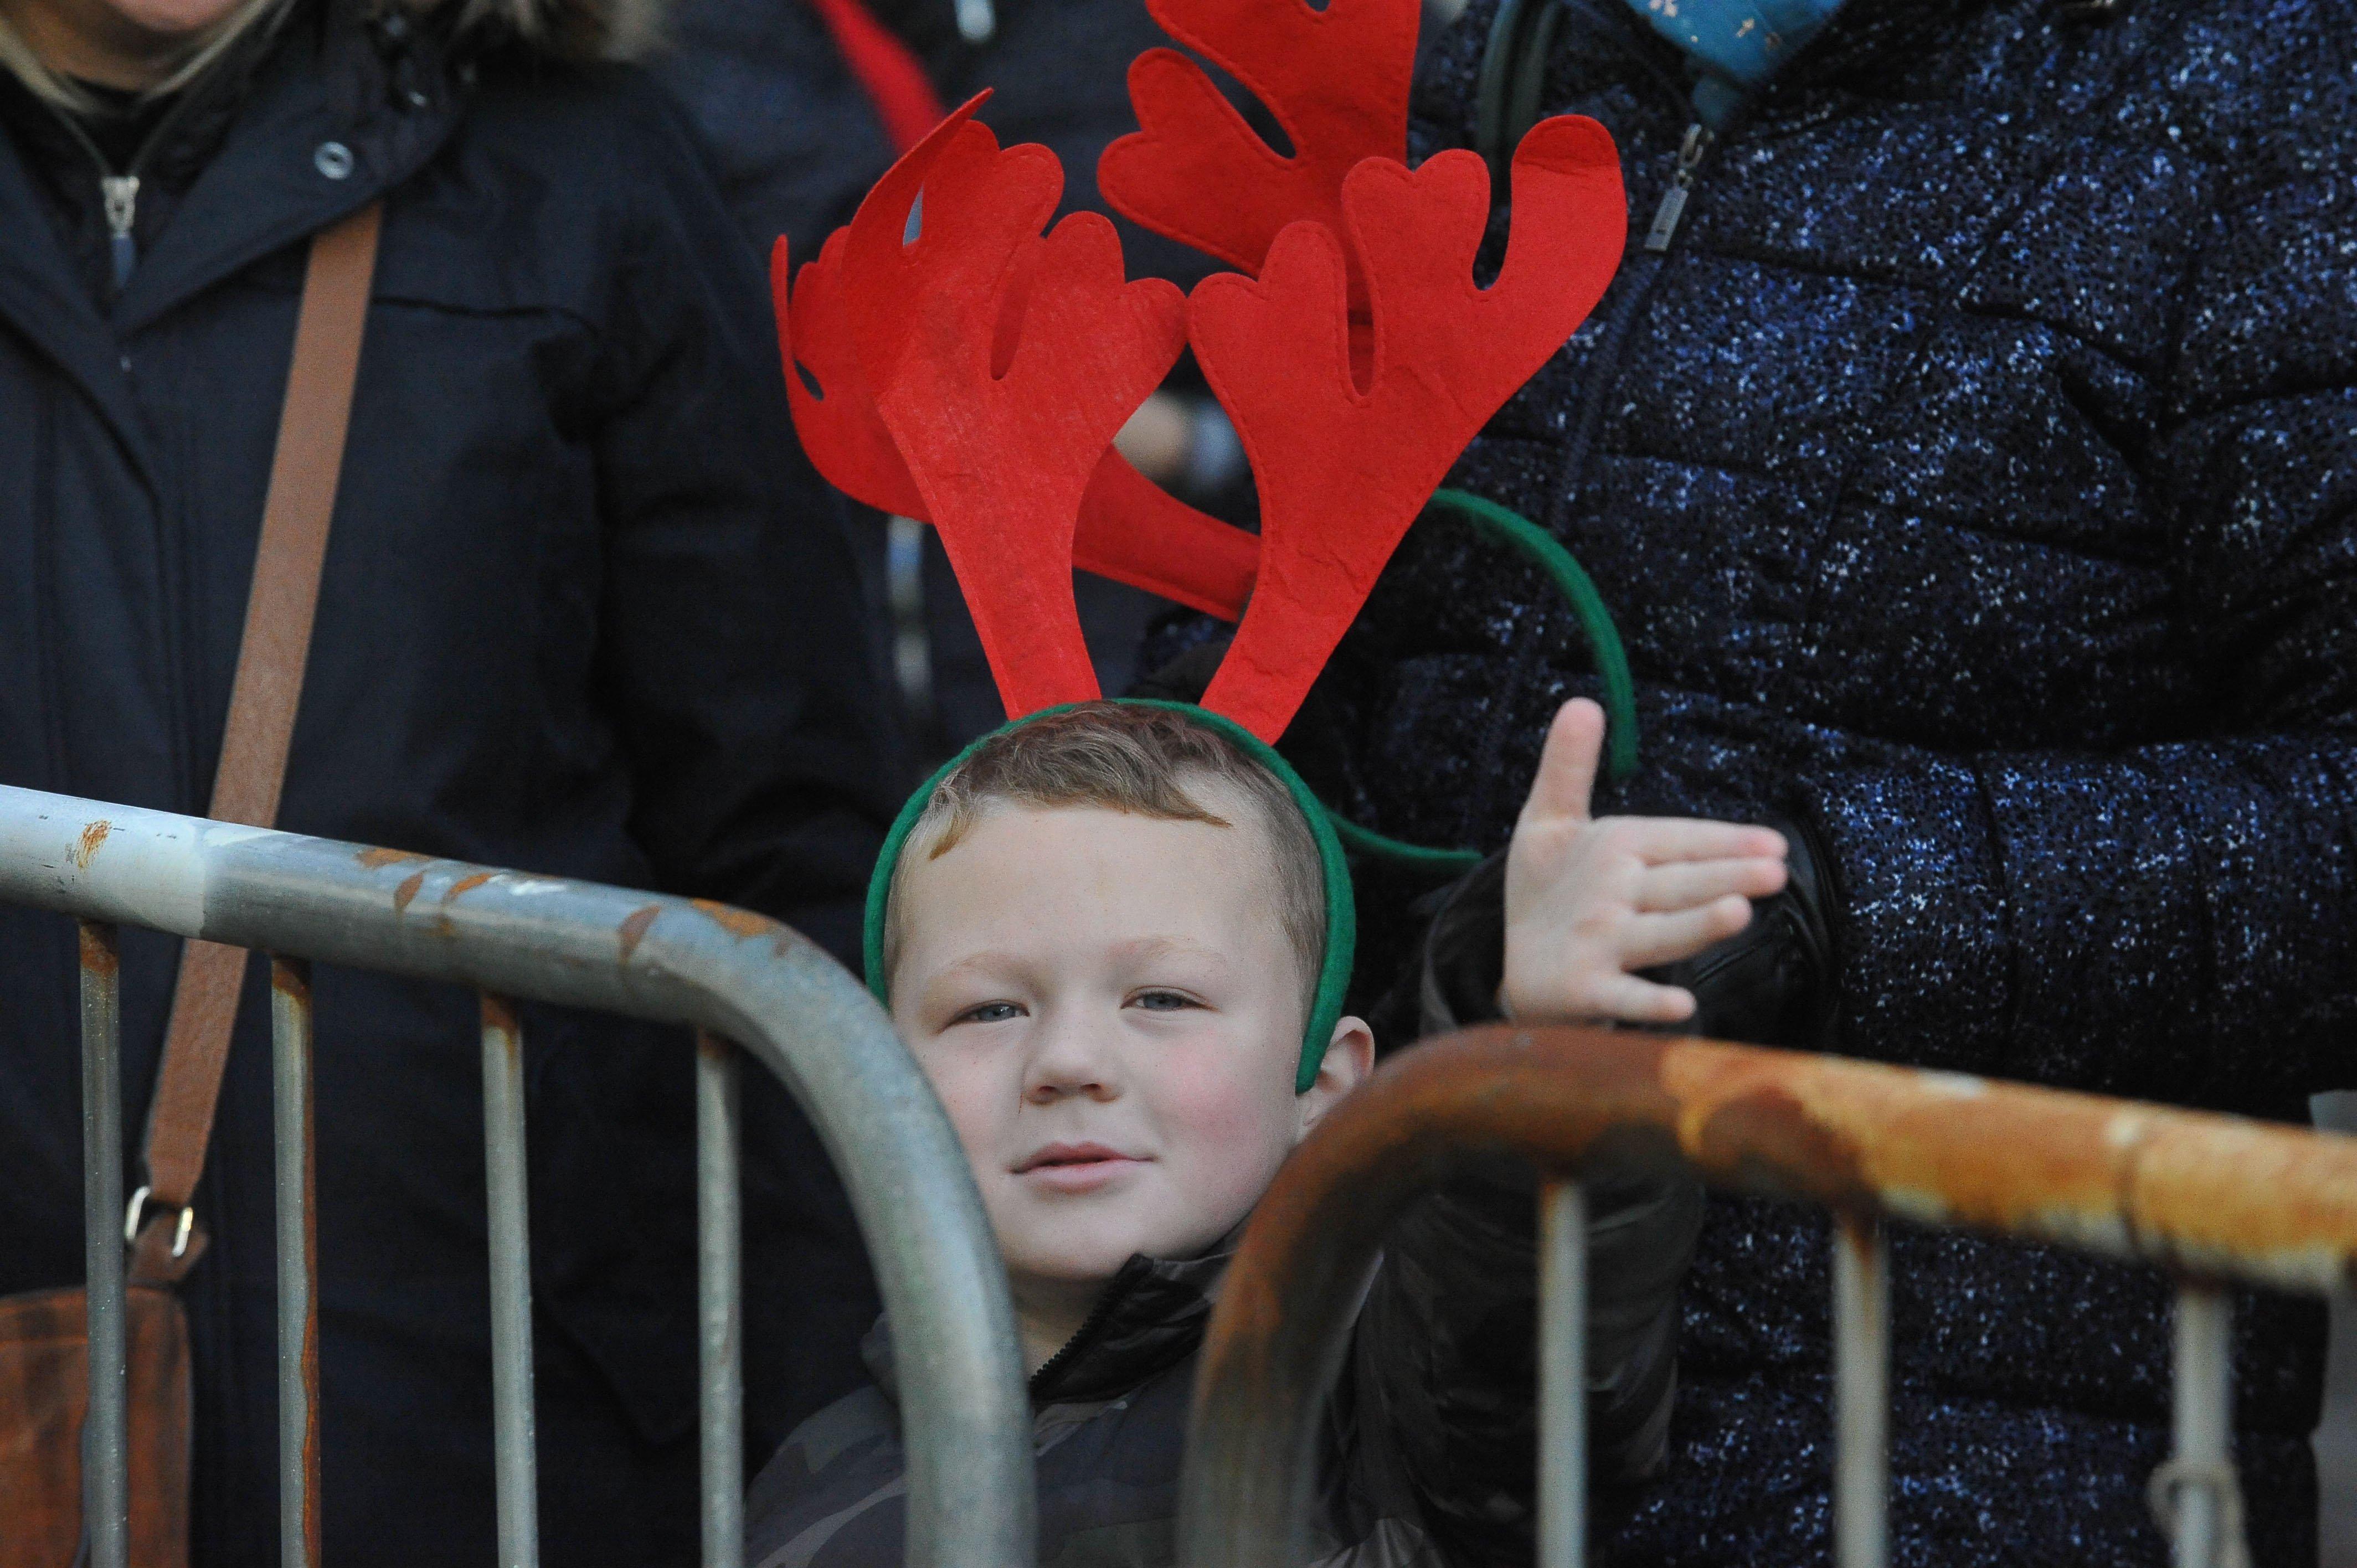 Mercat Reindeer Parade in Kirkcaldy on Sunday, November 17. Picture by George McLuskie.